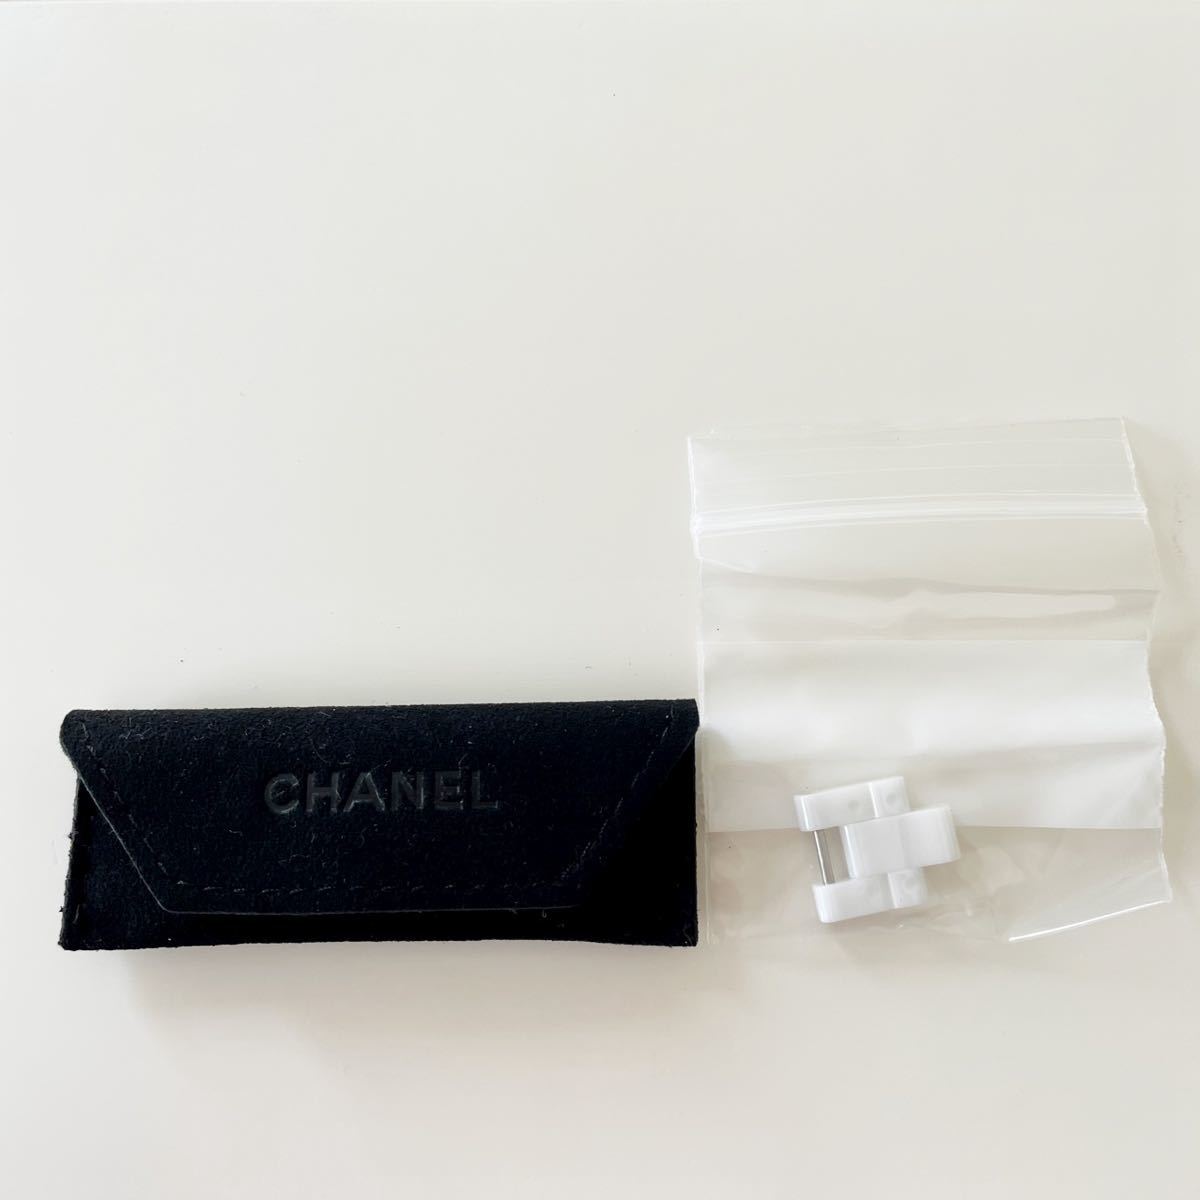 CHANEL 10 anniversary commemoration model limitation J12 white world 2000ps.@ Chanel 